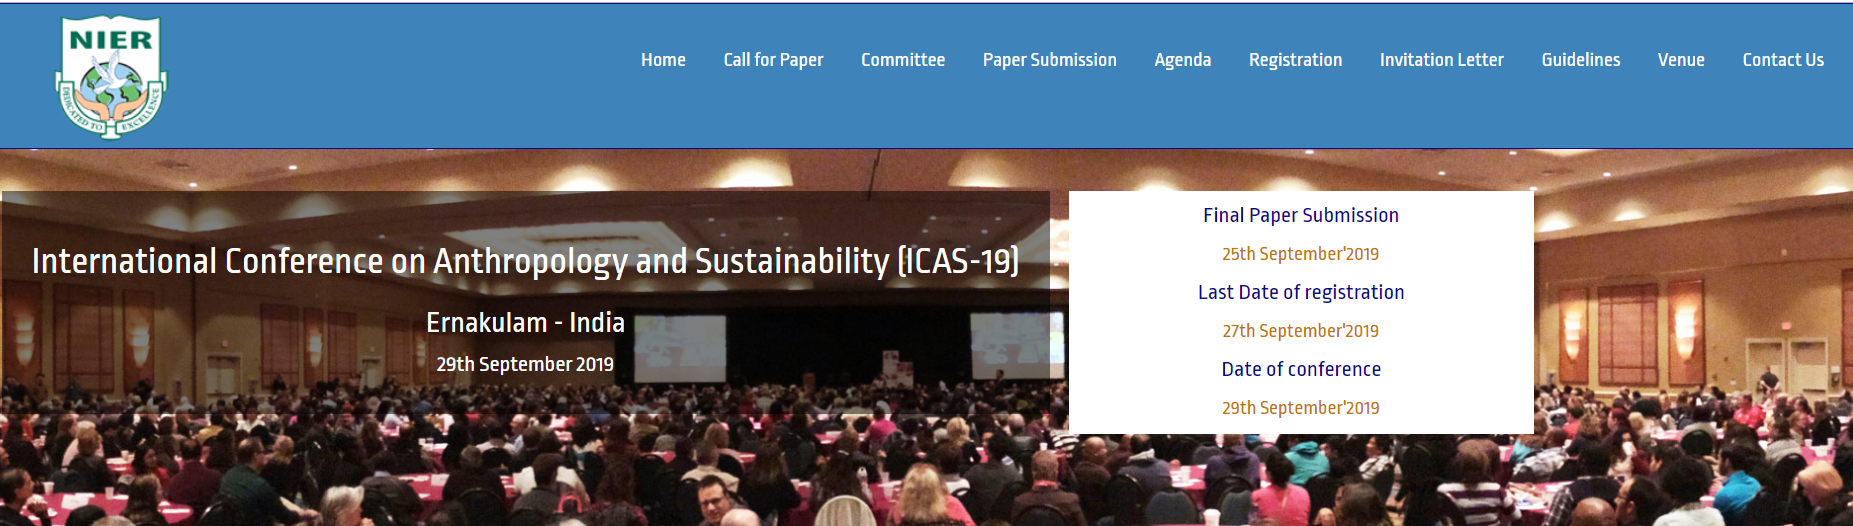 International Conference on Anthropology and Sustainability (ICAS-19), Ernakulam, Kerala, India